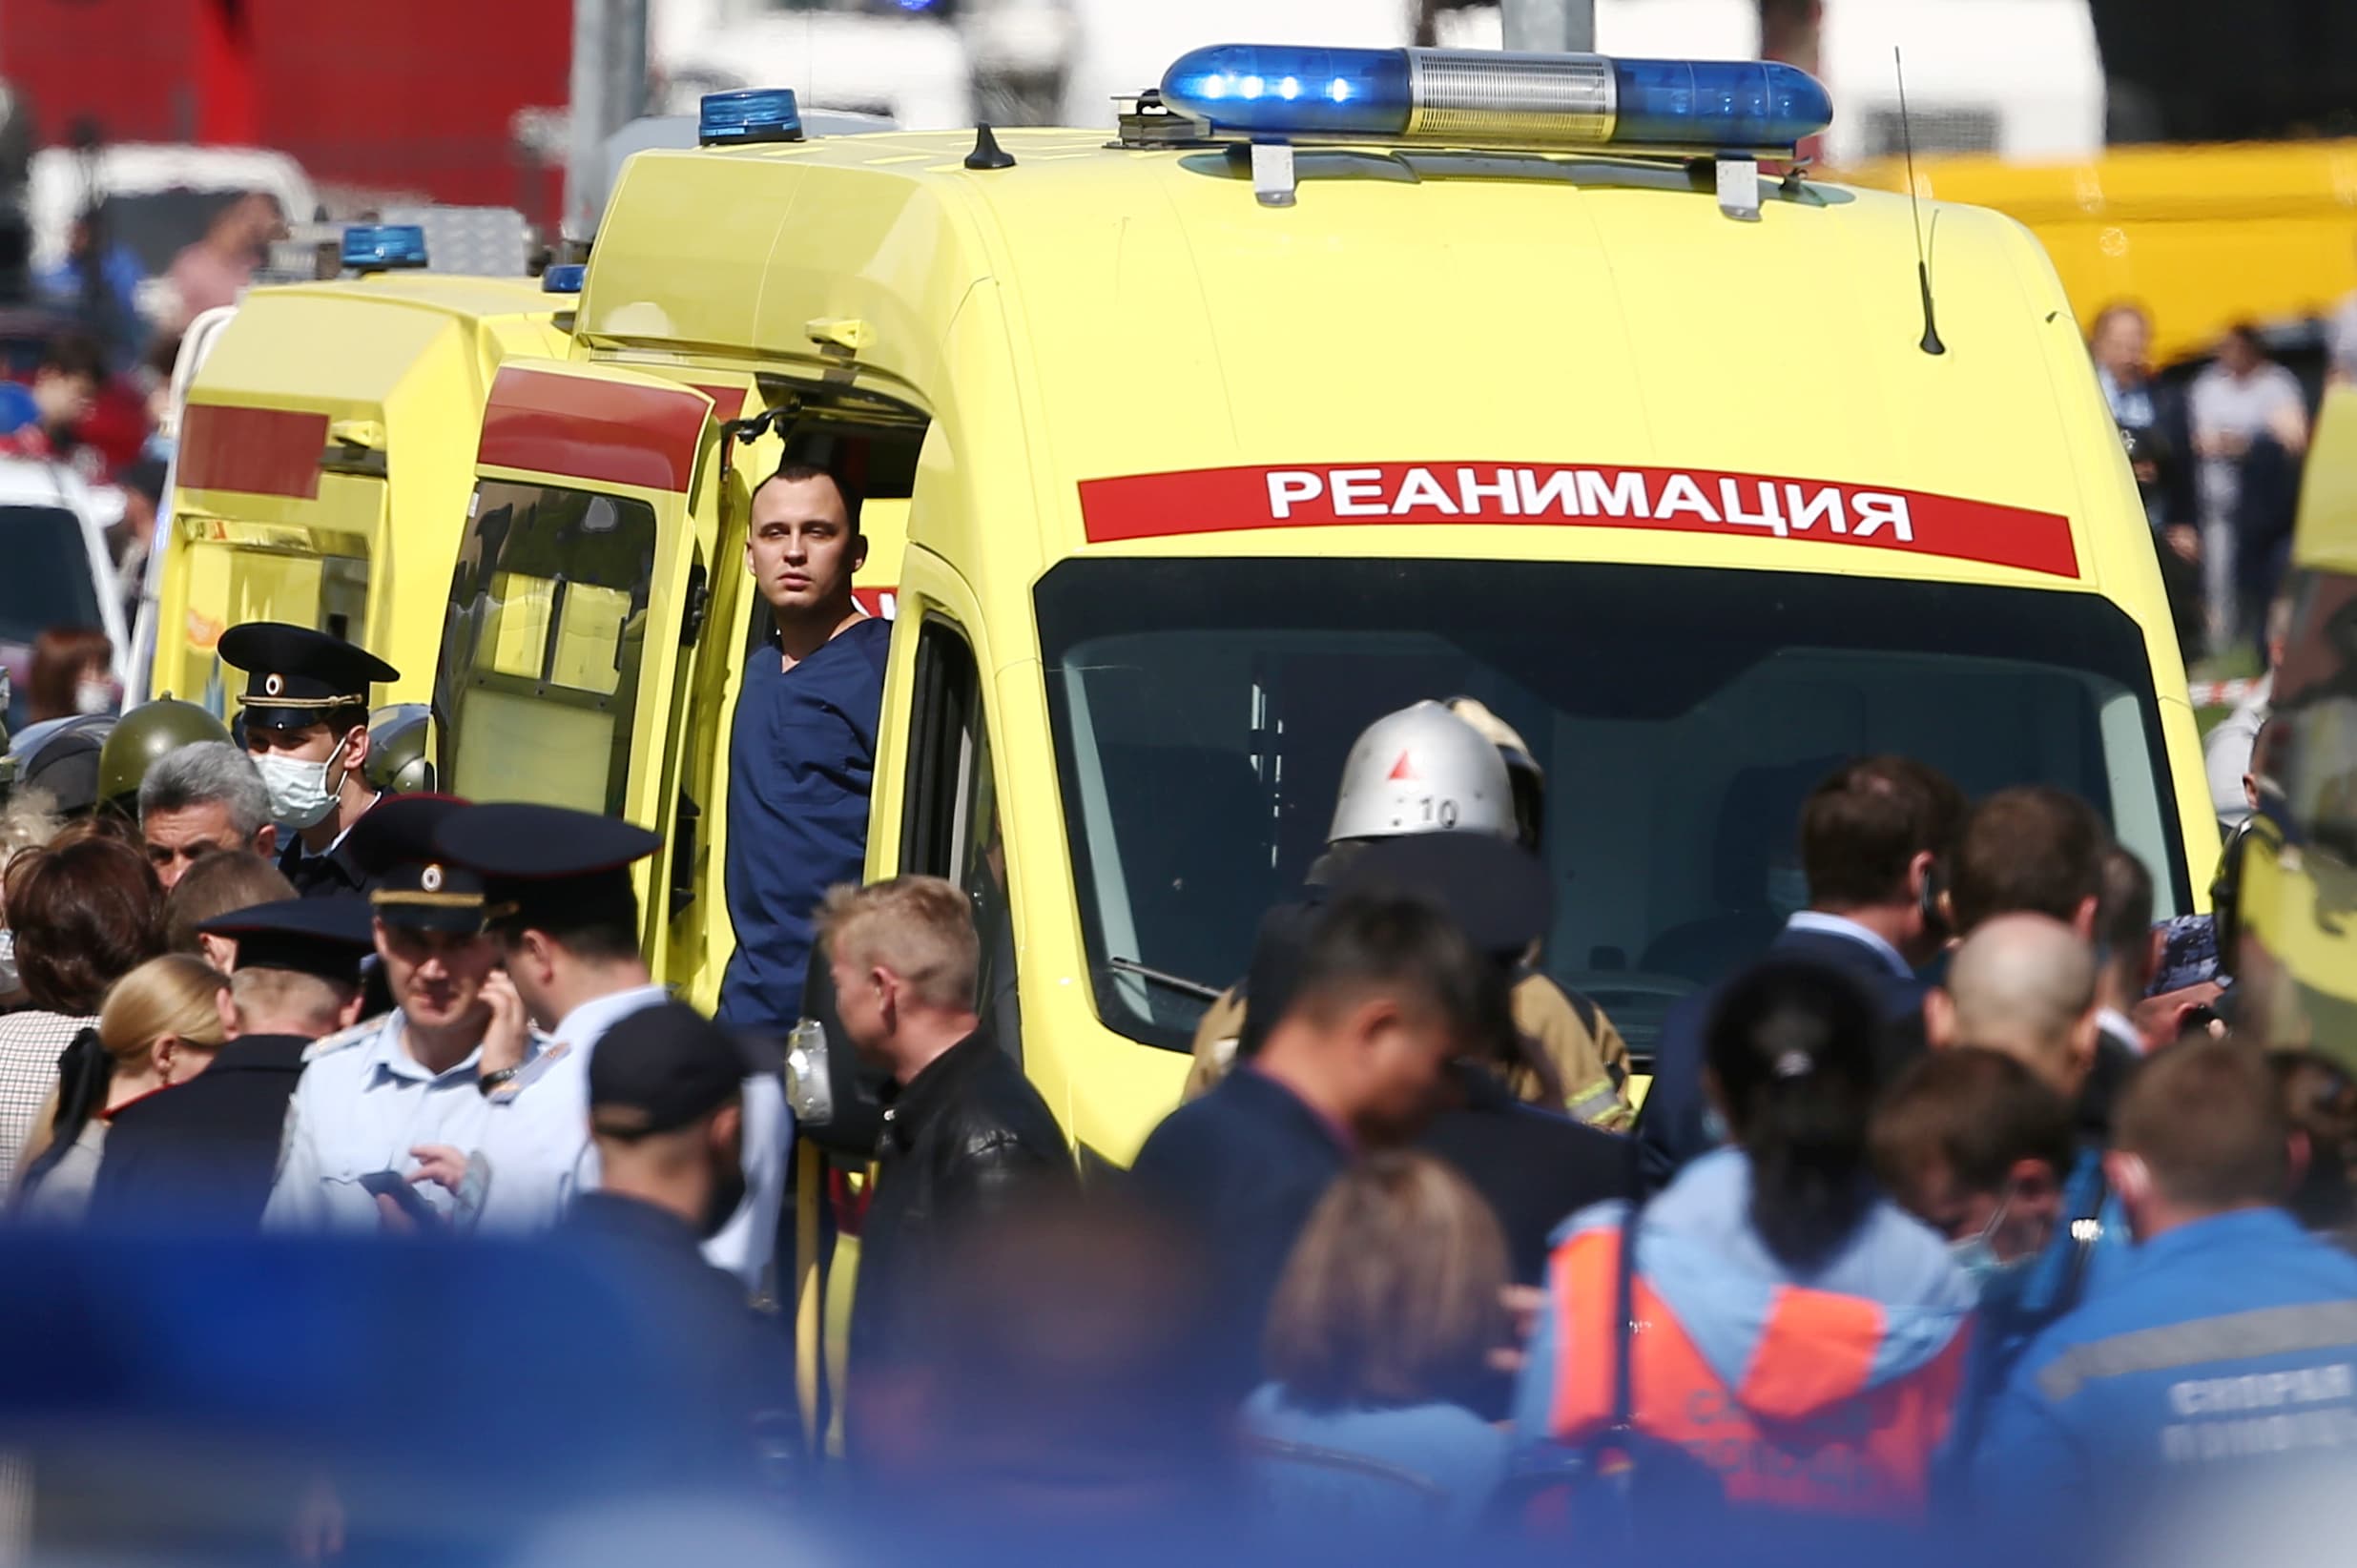 11 killed in Russia school shooting